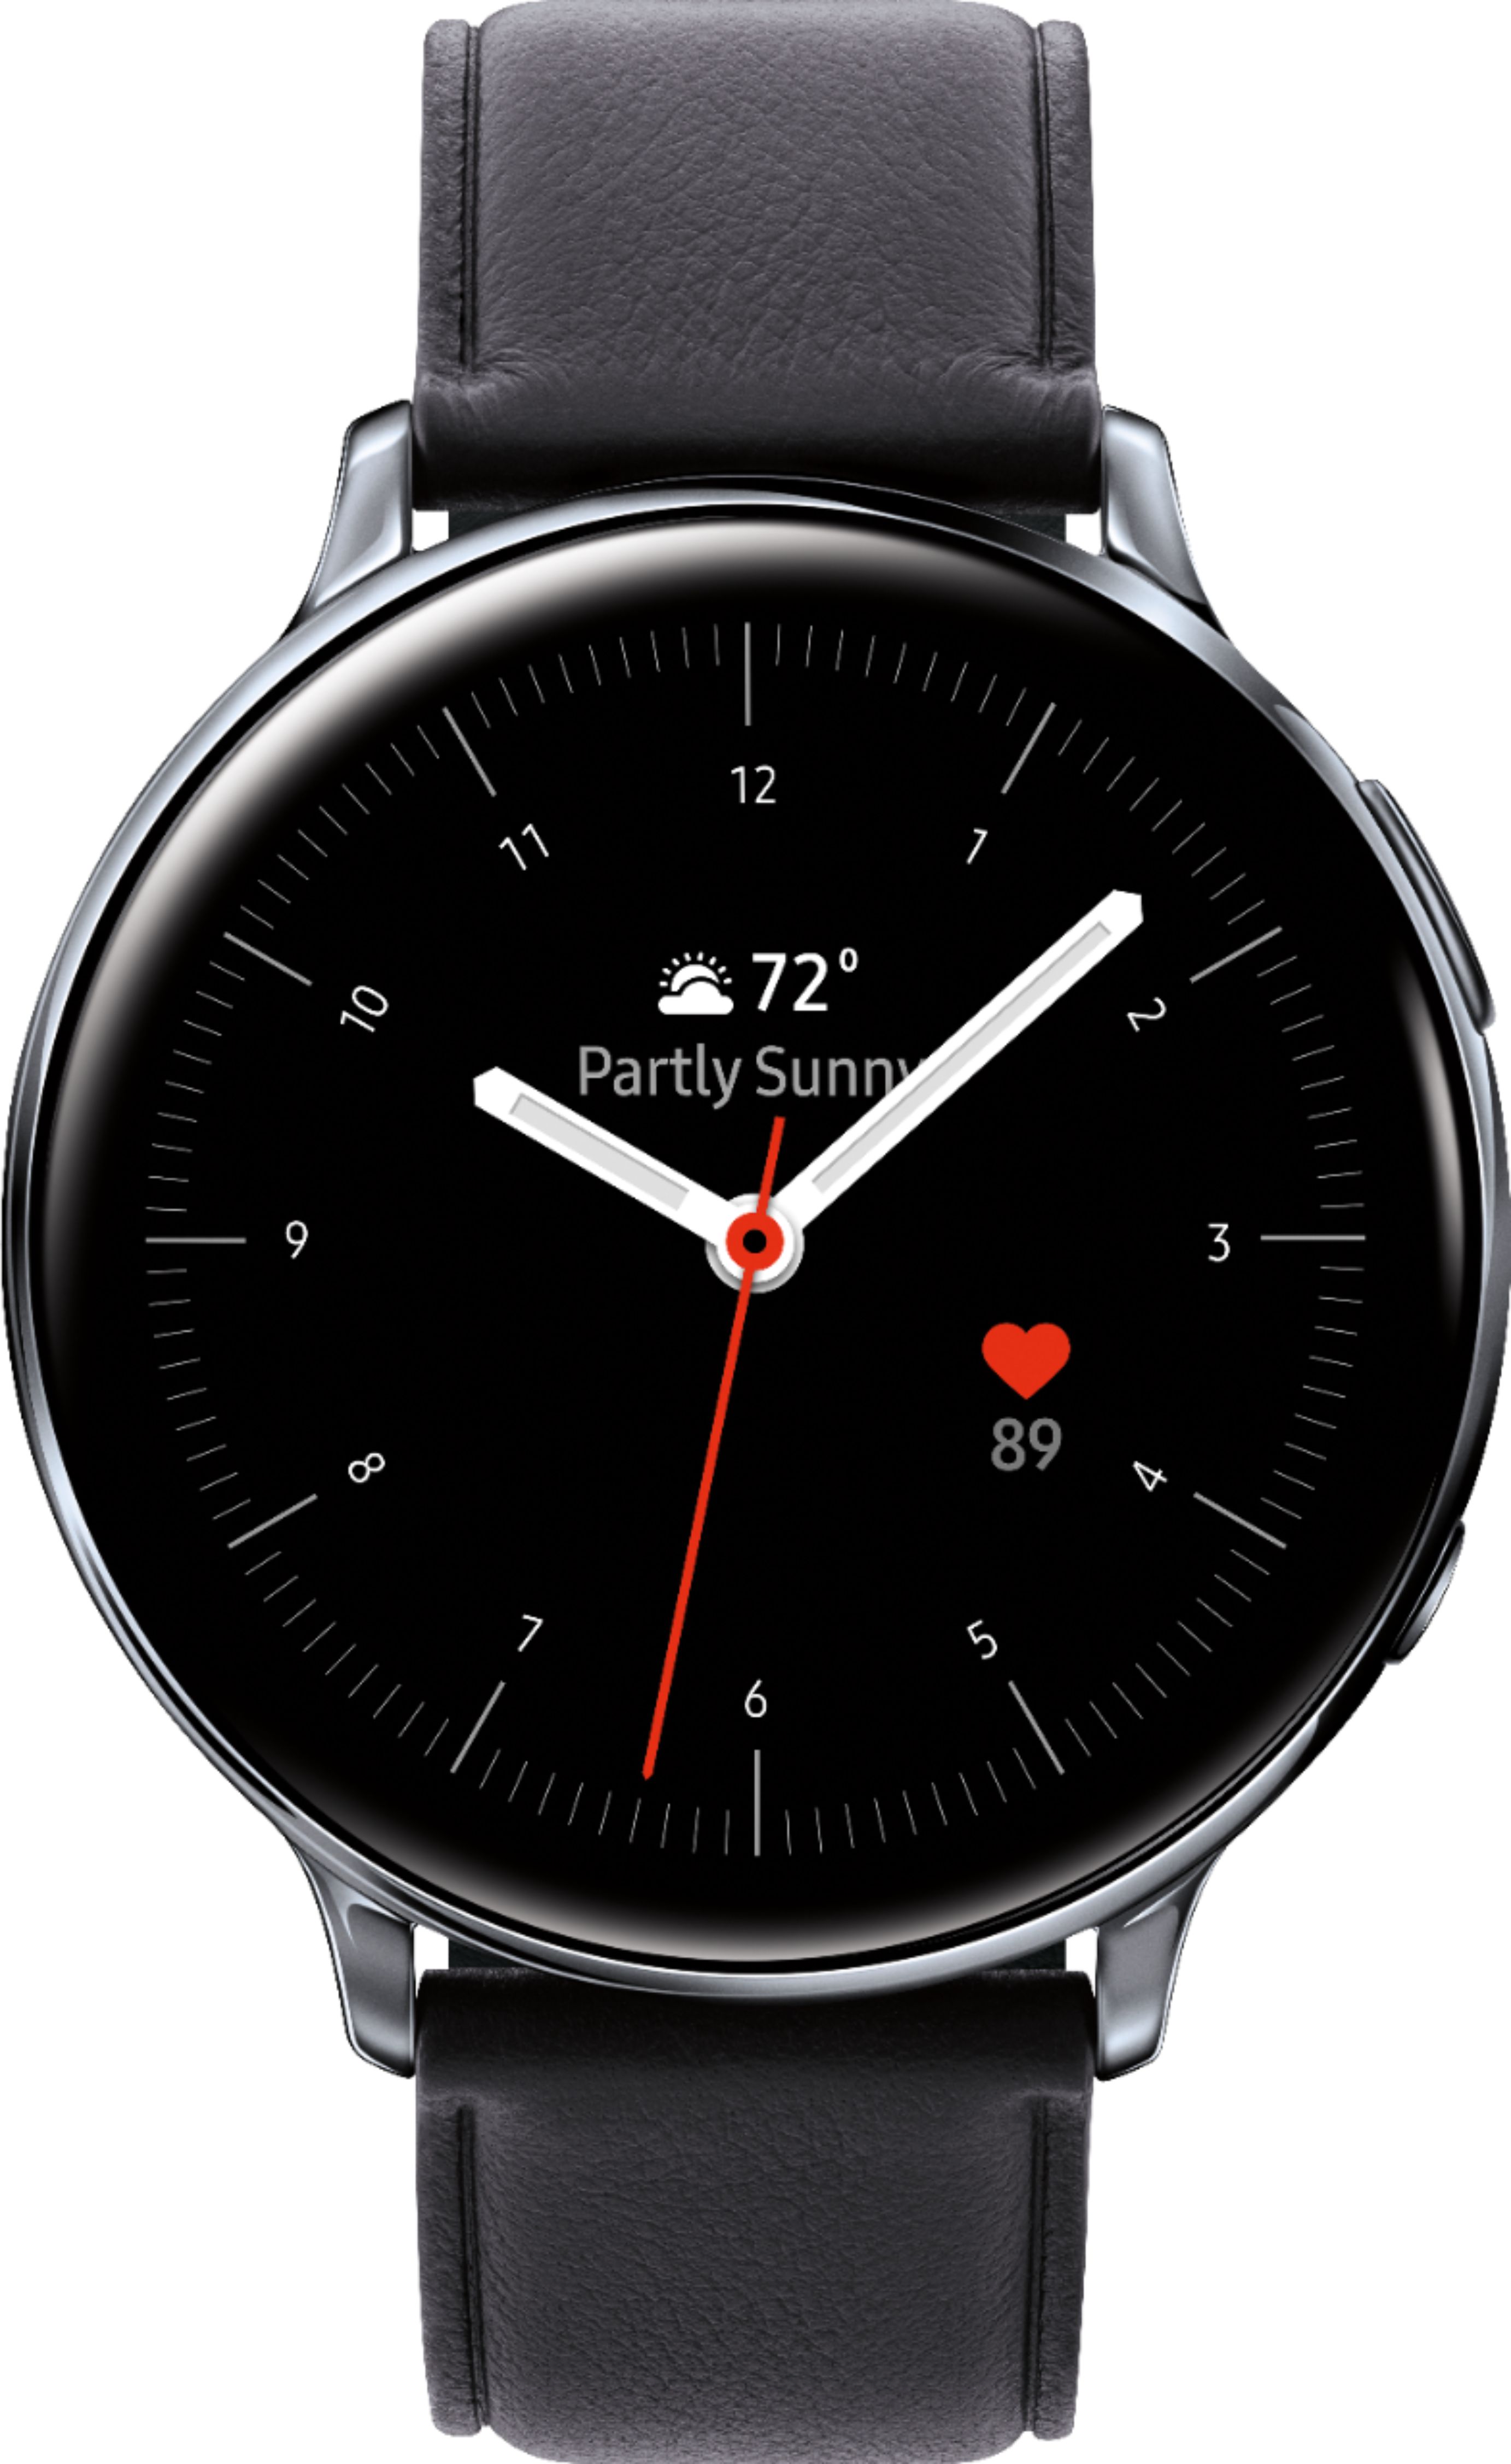 Samsung Galaxy Watch Active2 Smartwatch 44mm Stainless ...